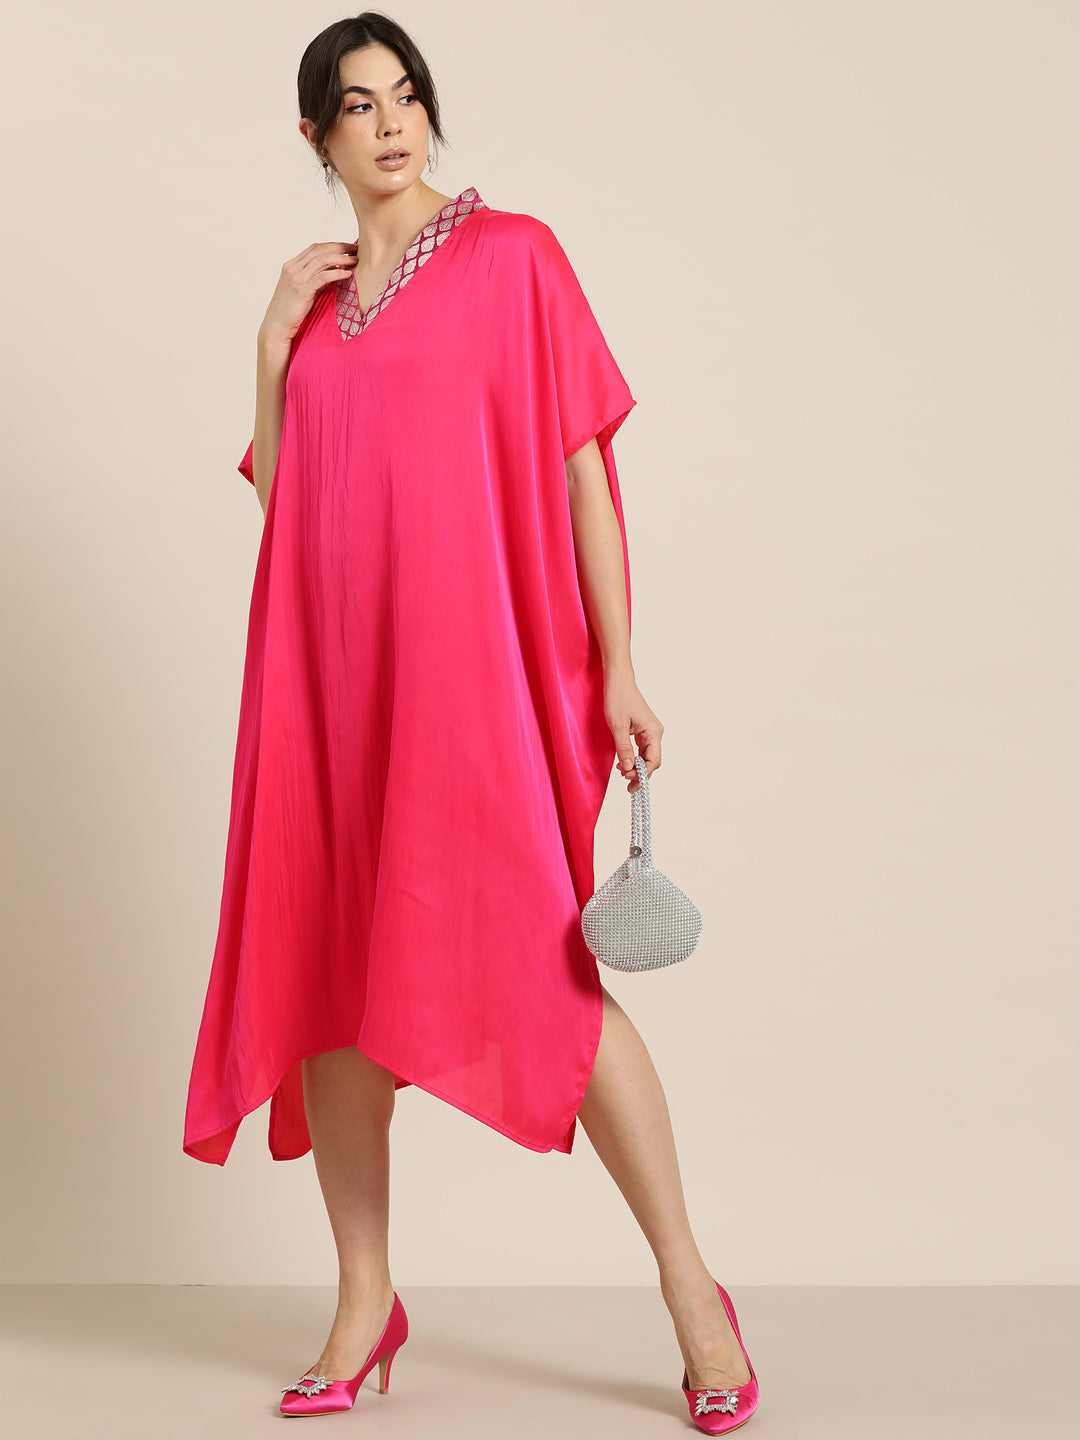 Fuchia pink silk Kimono dress with brocade